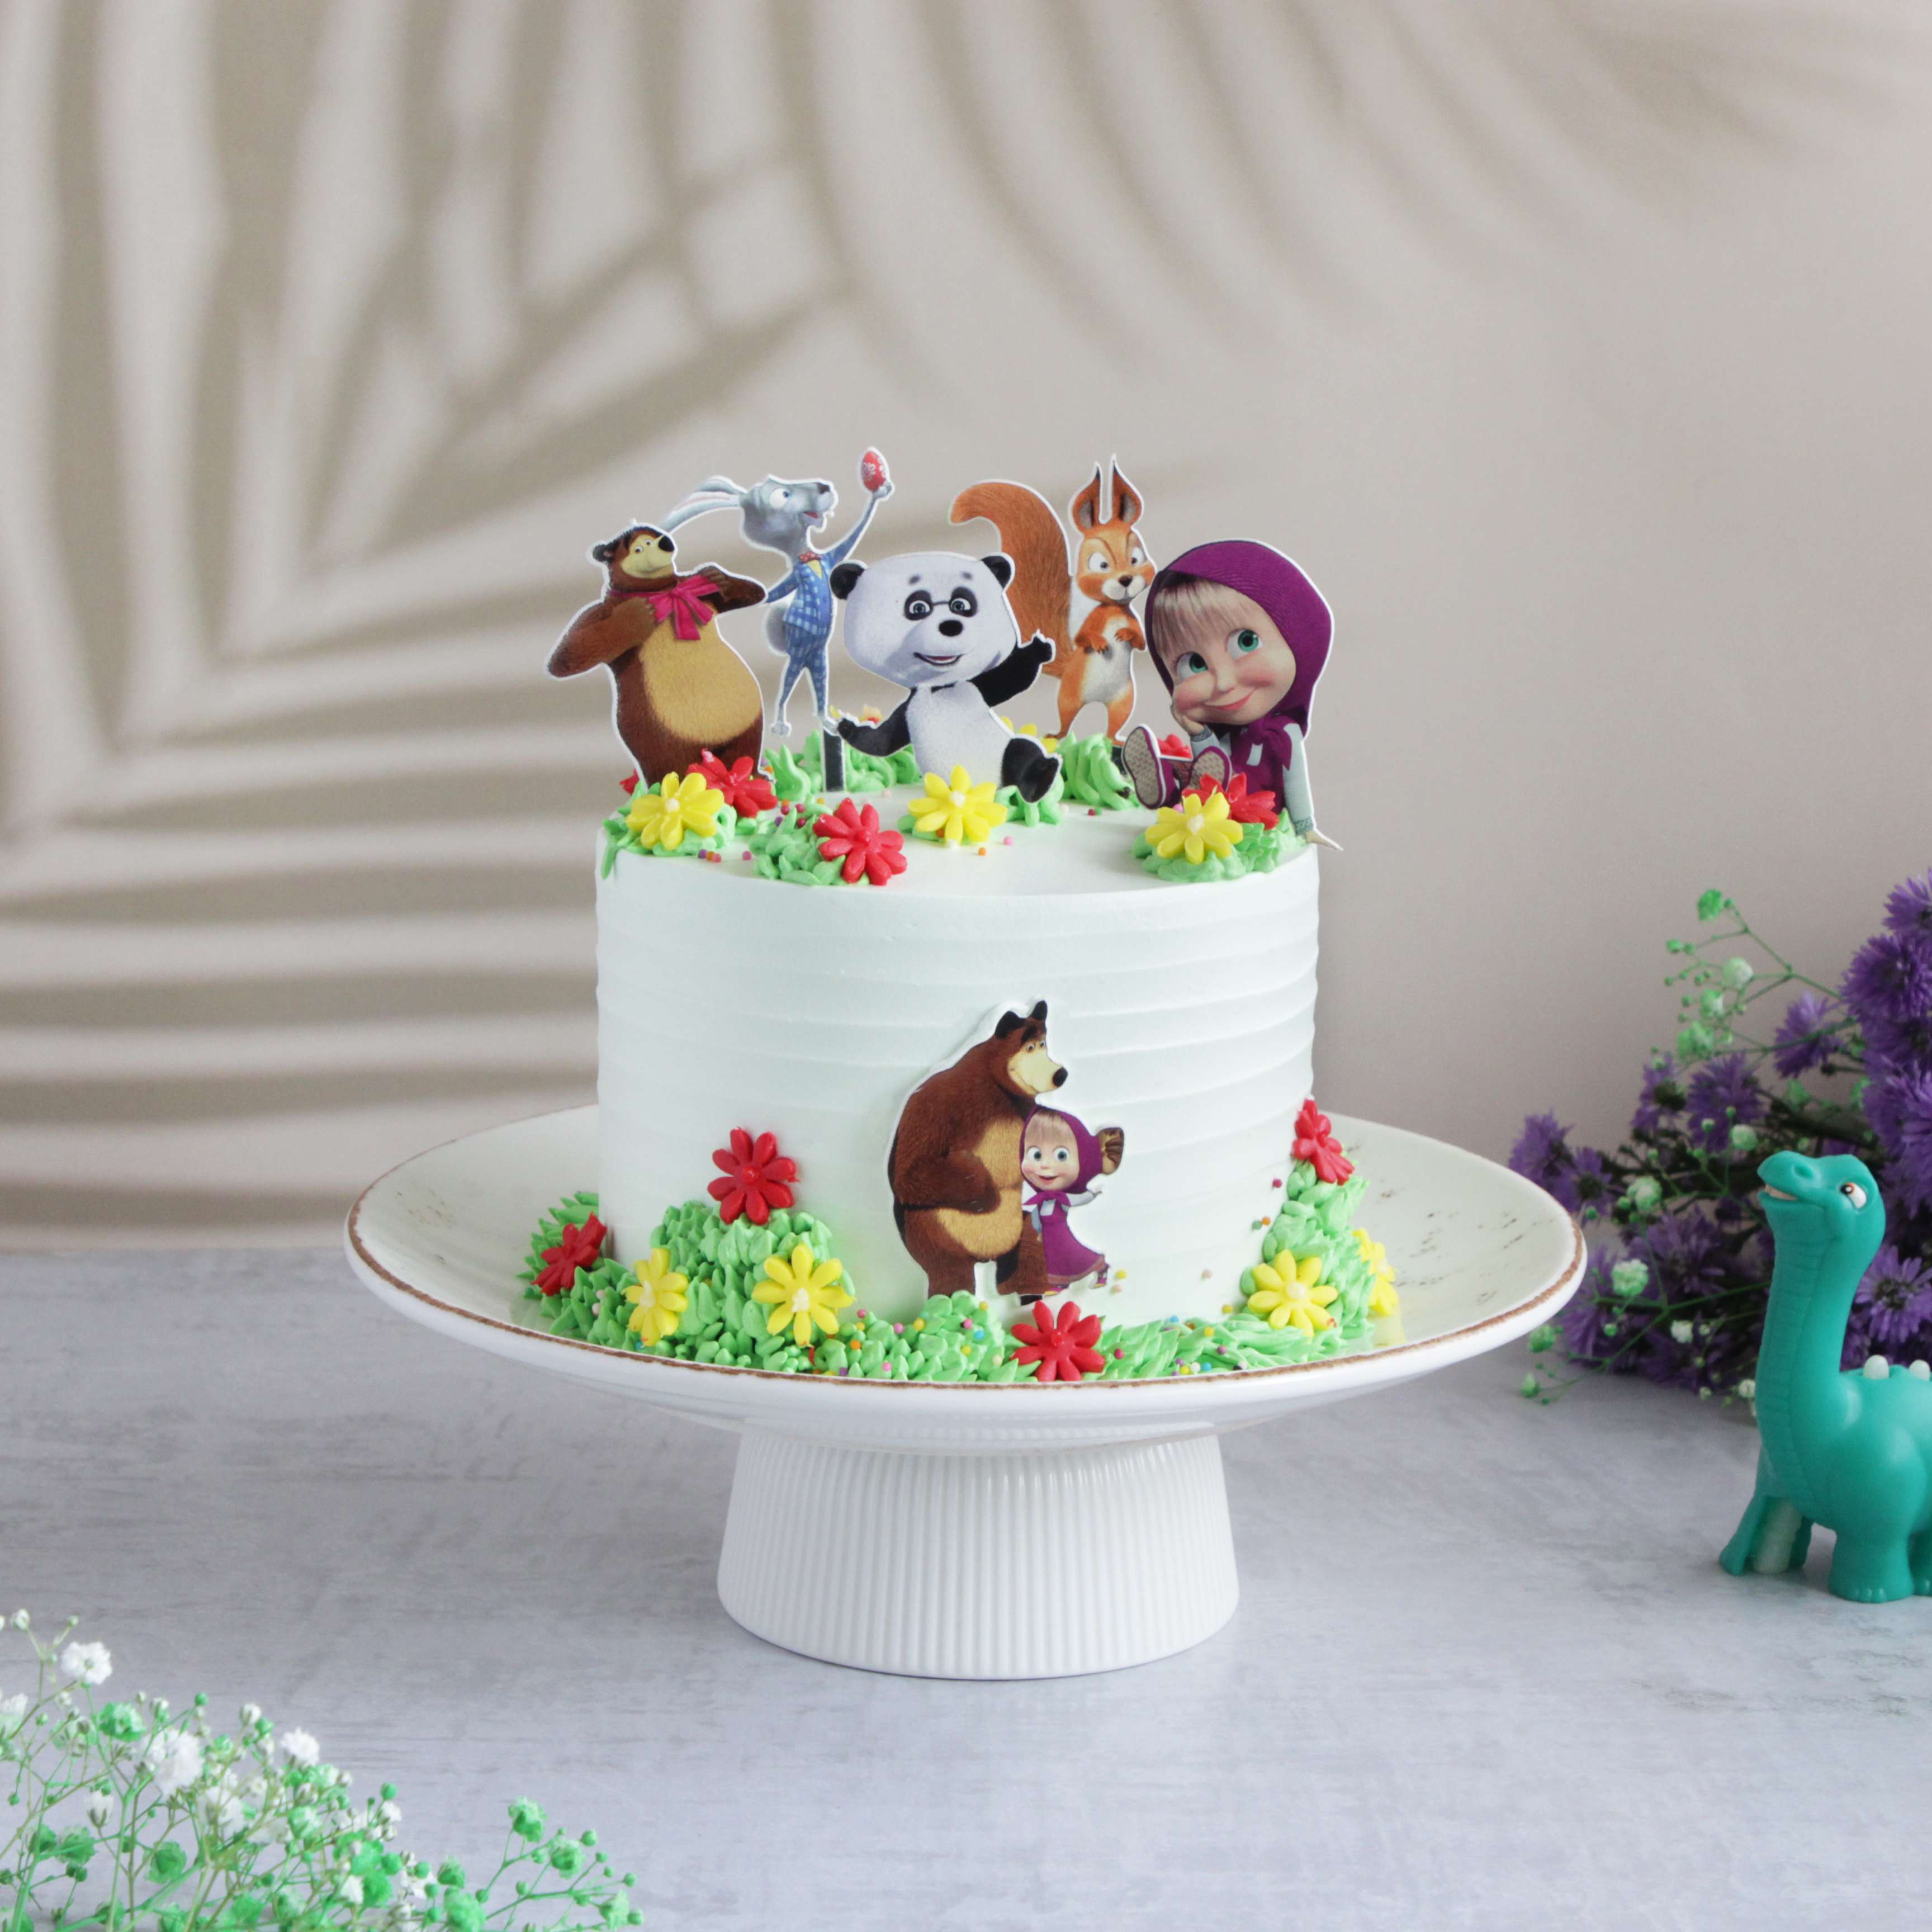 Masha and the bear-themed cakes